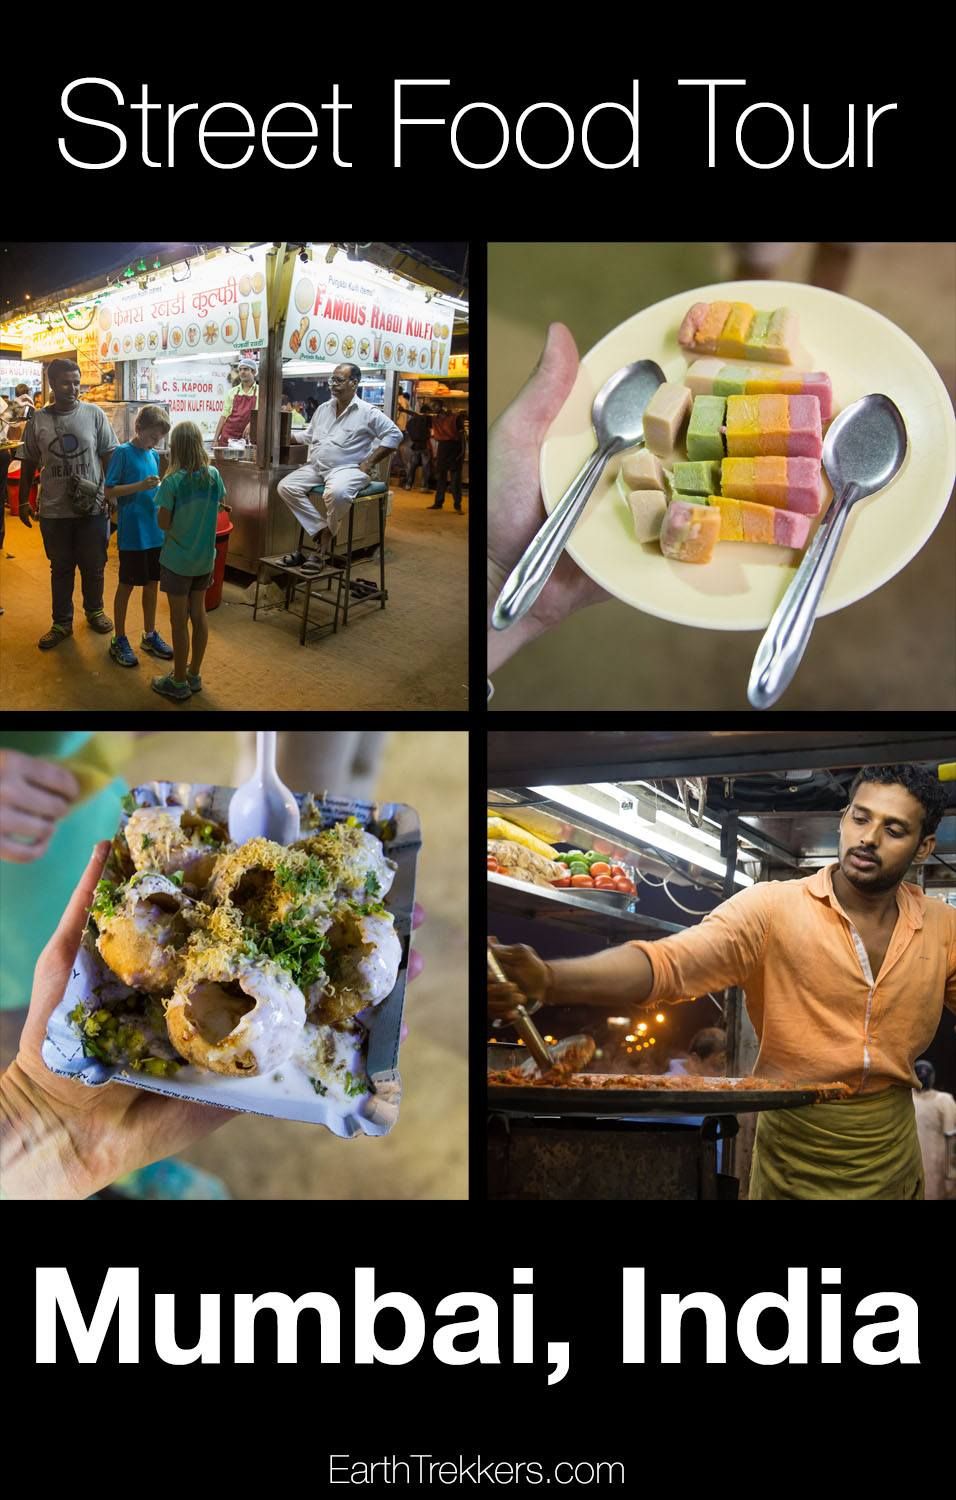 Street food tour in Mumbai India